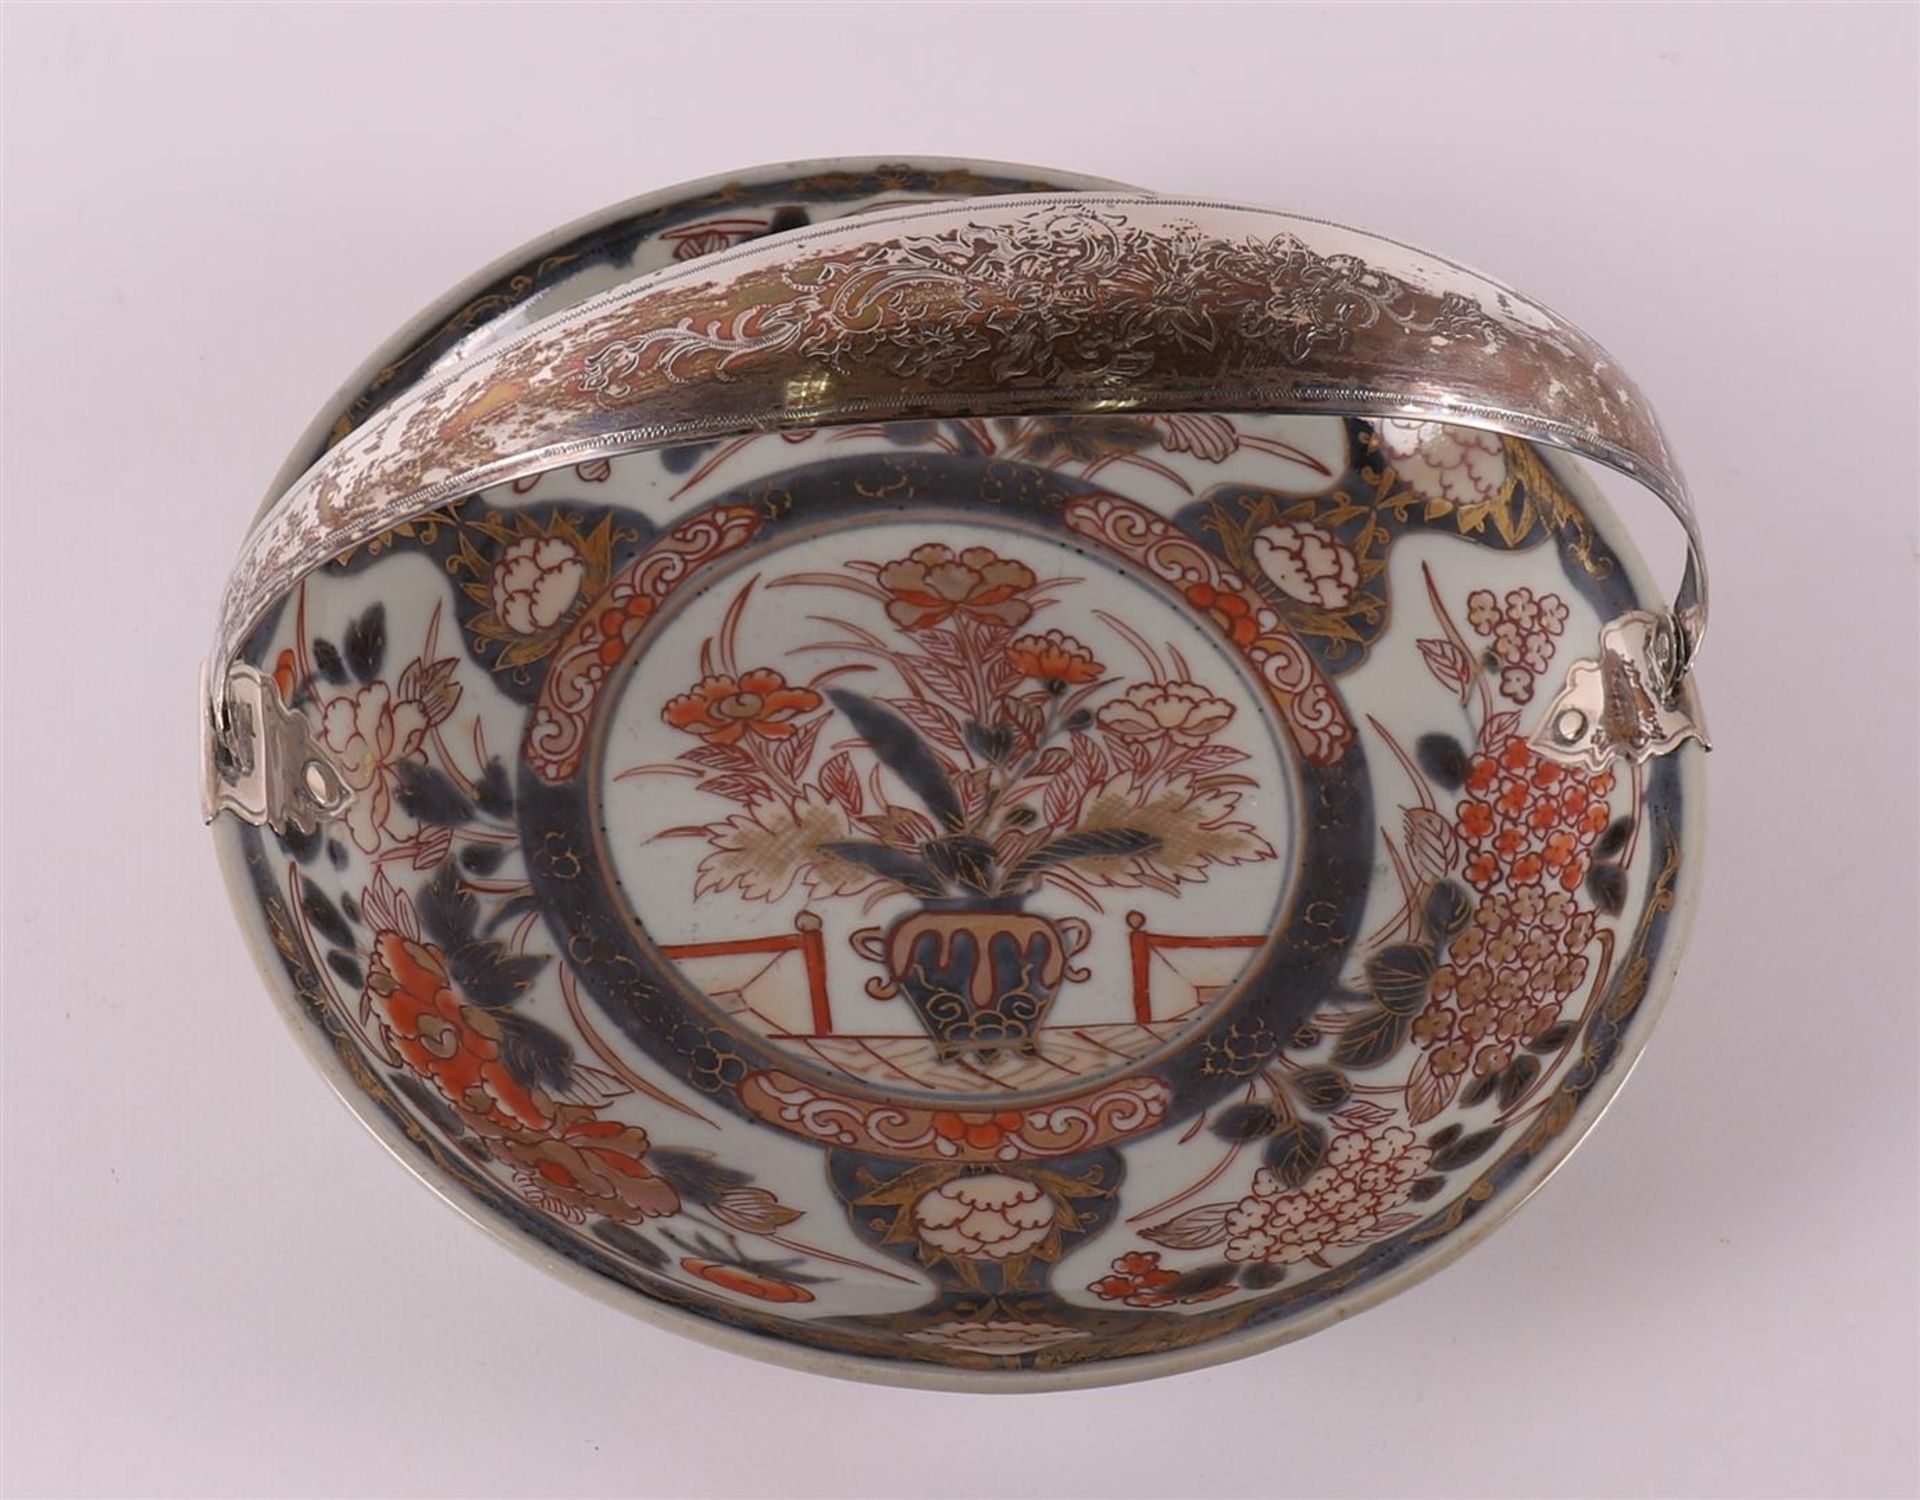 A porcelain Japanese Imari plate with silver handle, Japan, Edo, around 1700.